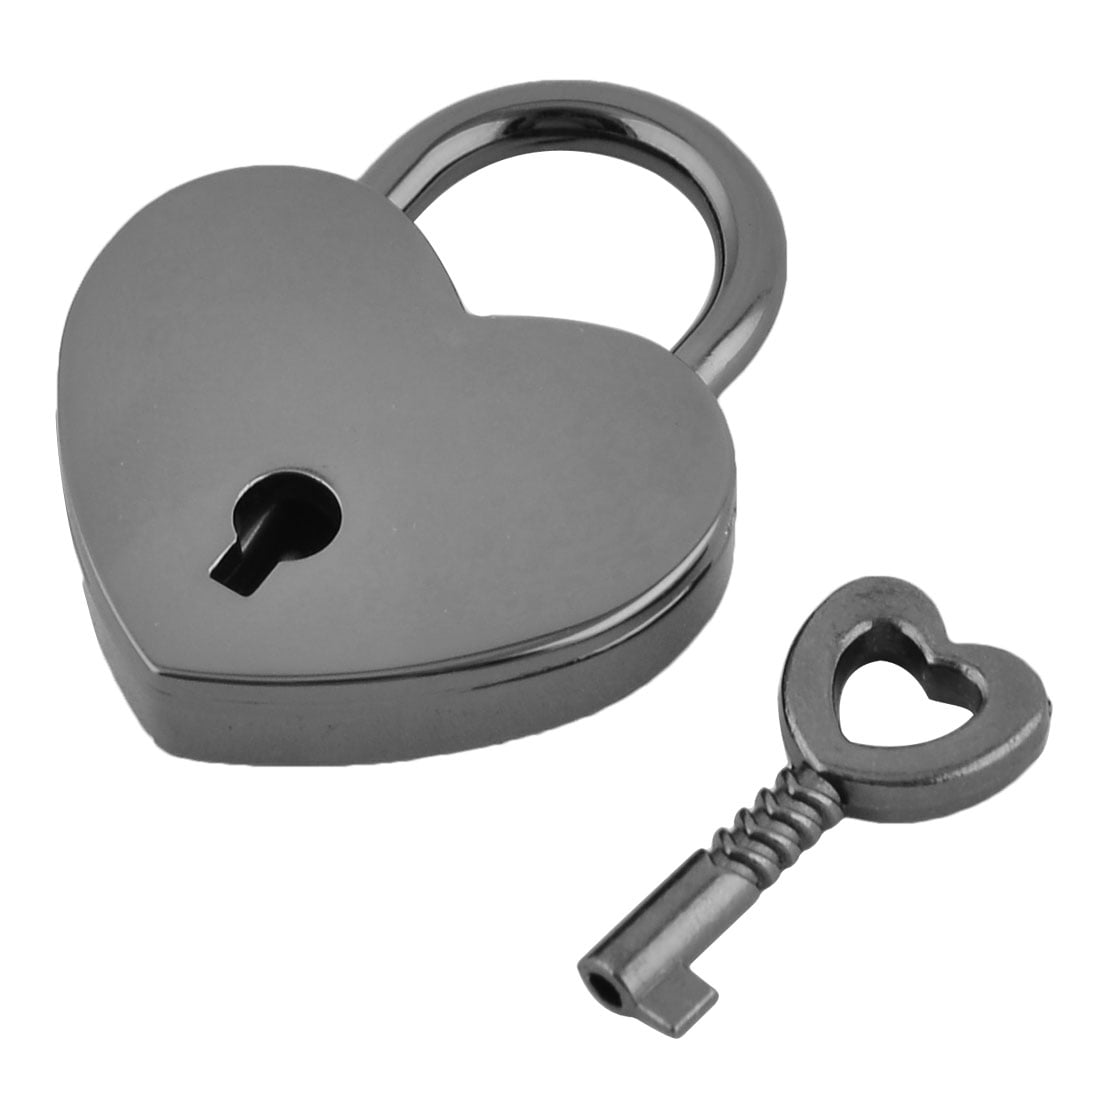 Suitcase Luggage 3 Digit Password Security Tool Padlock Heart Shaped Lock